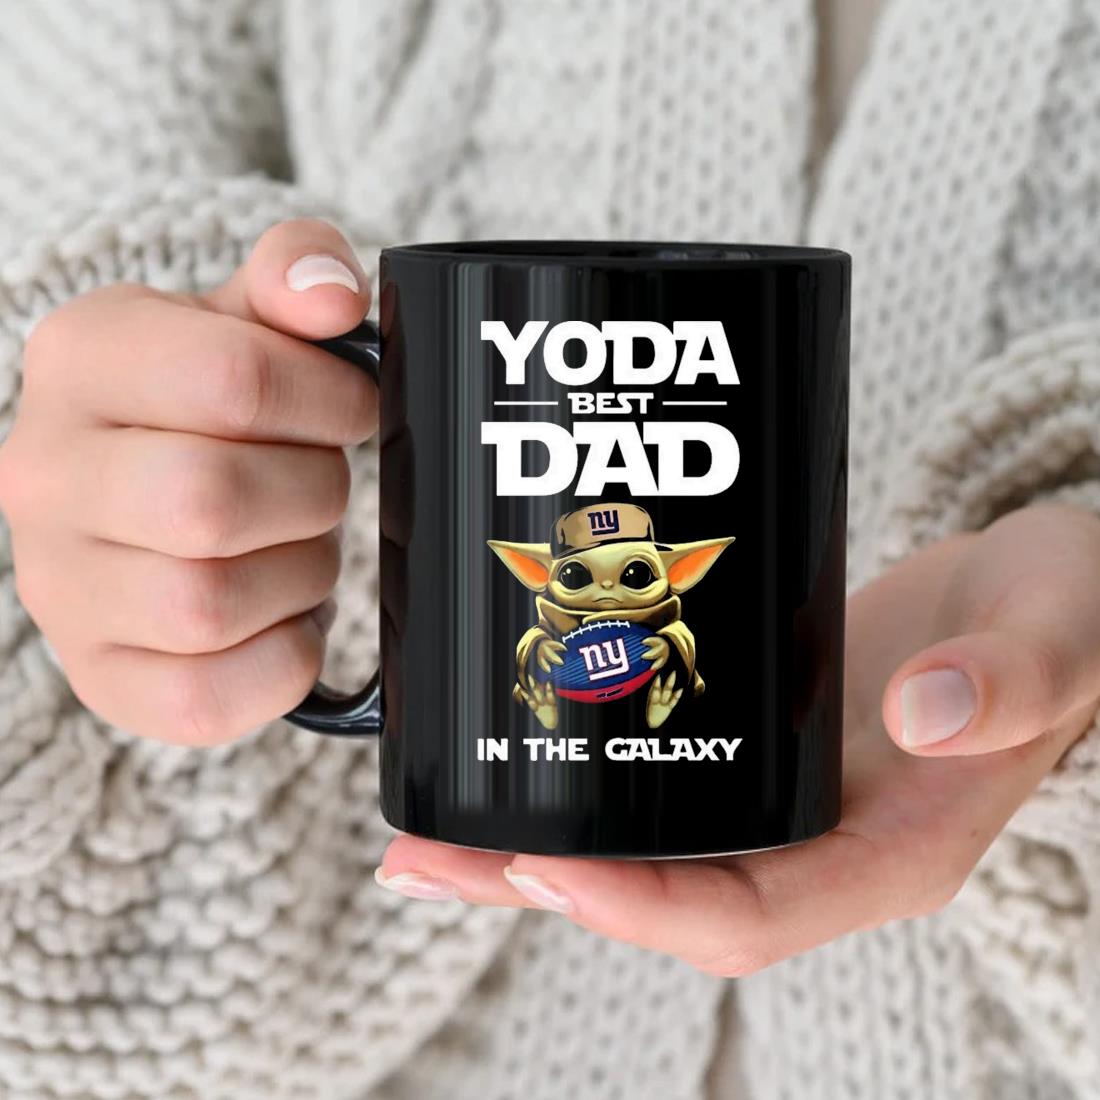 Yoda Best Dad In The Galaxy New York Giants Football Nfl Mug